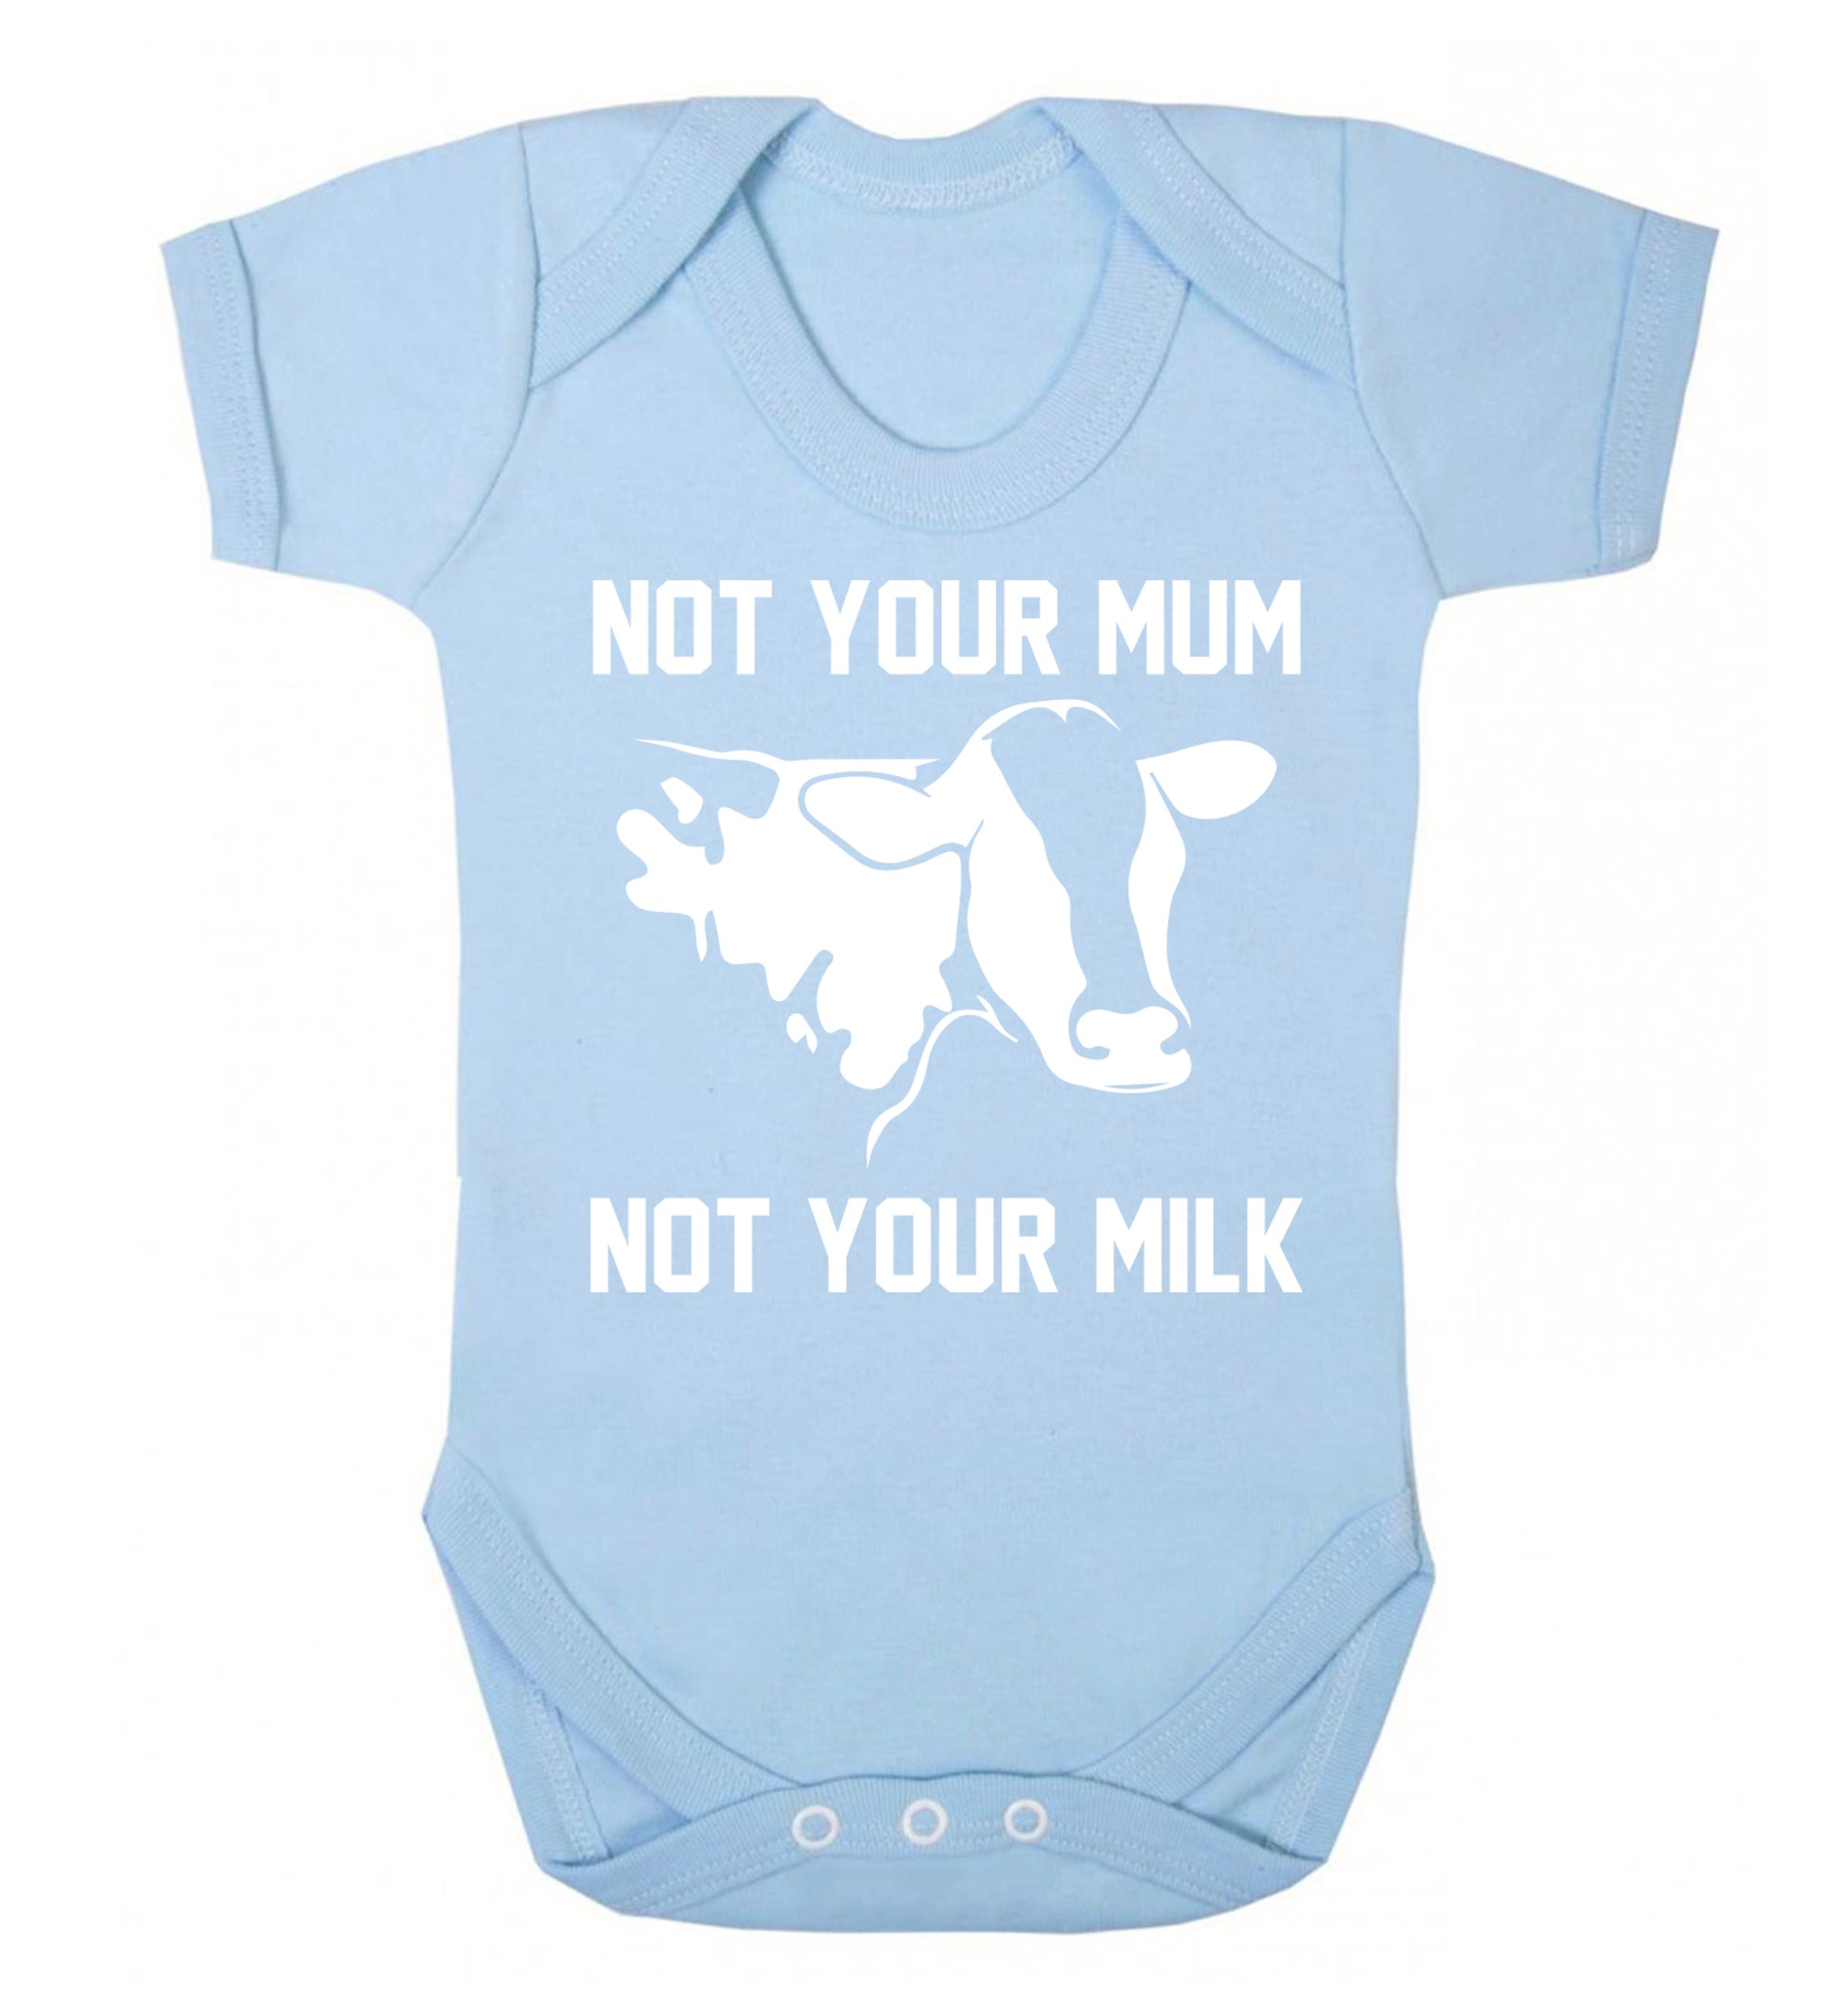 Not your mum not your milk Baby Vest pale blue 18-24 months